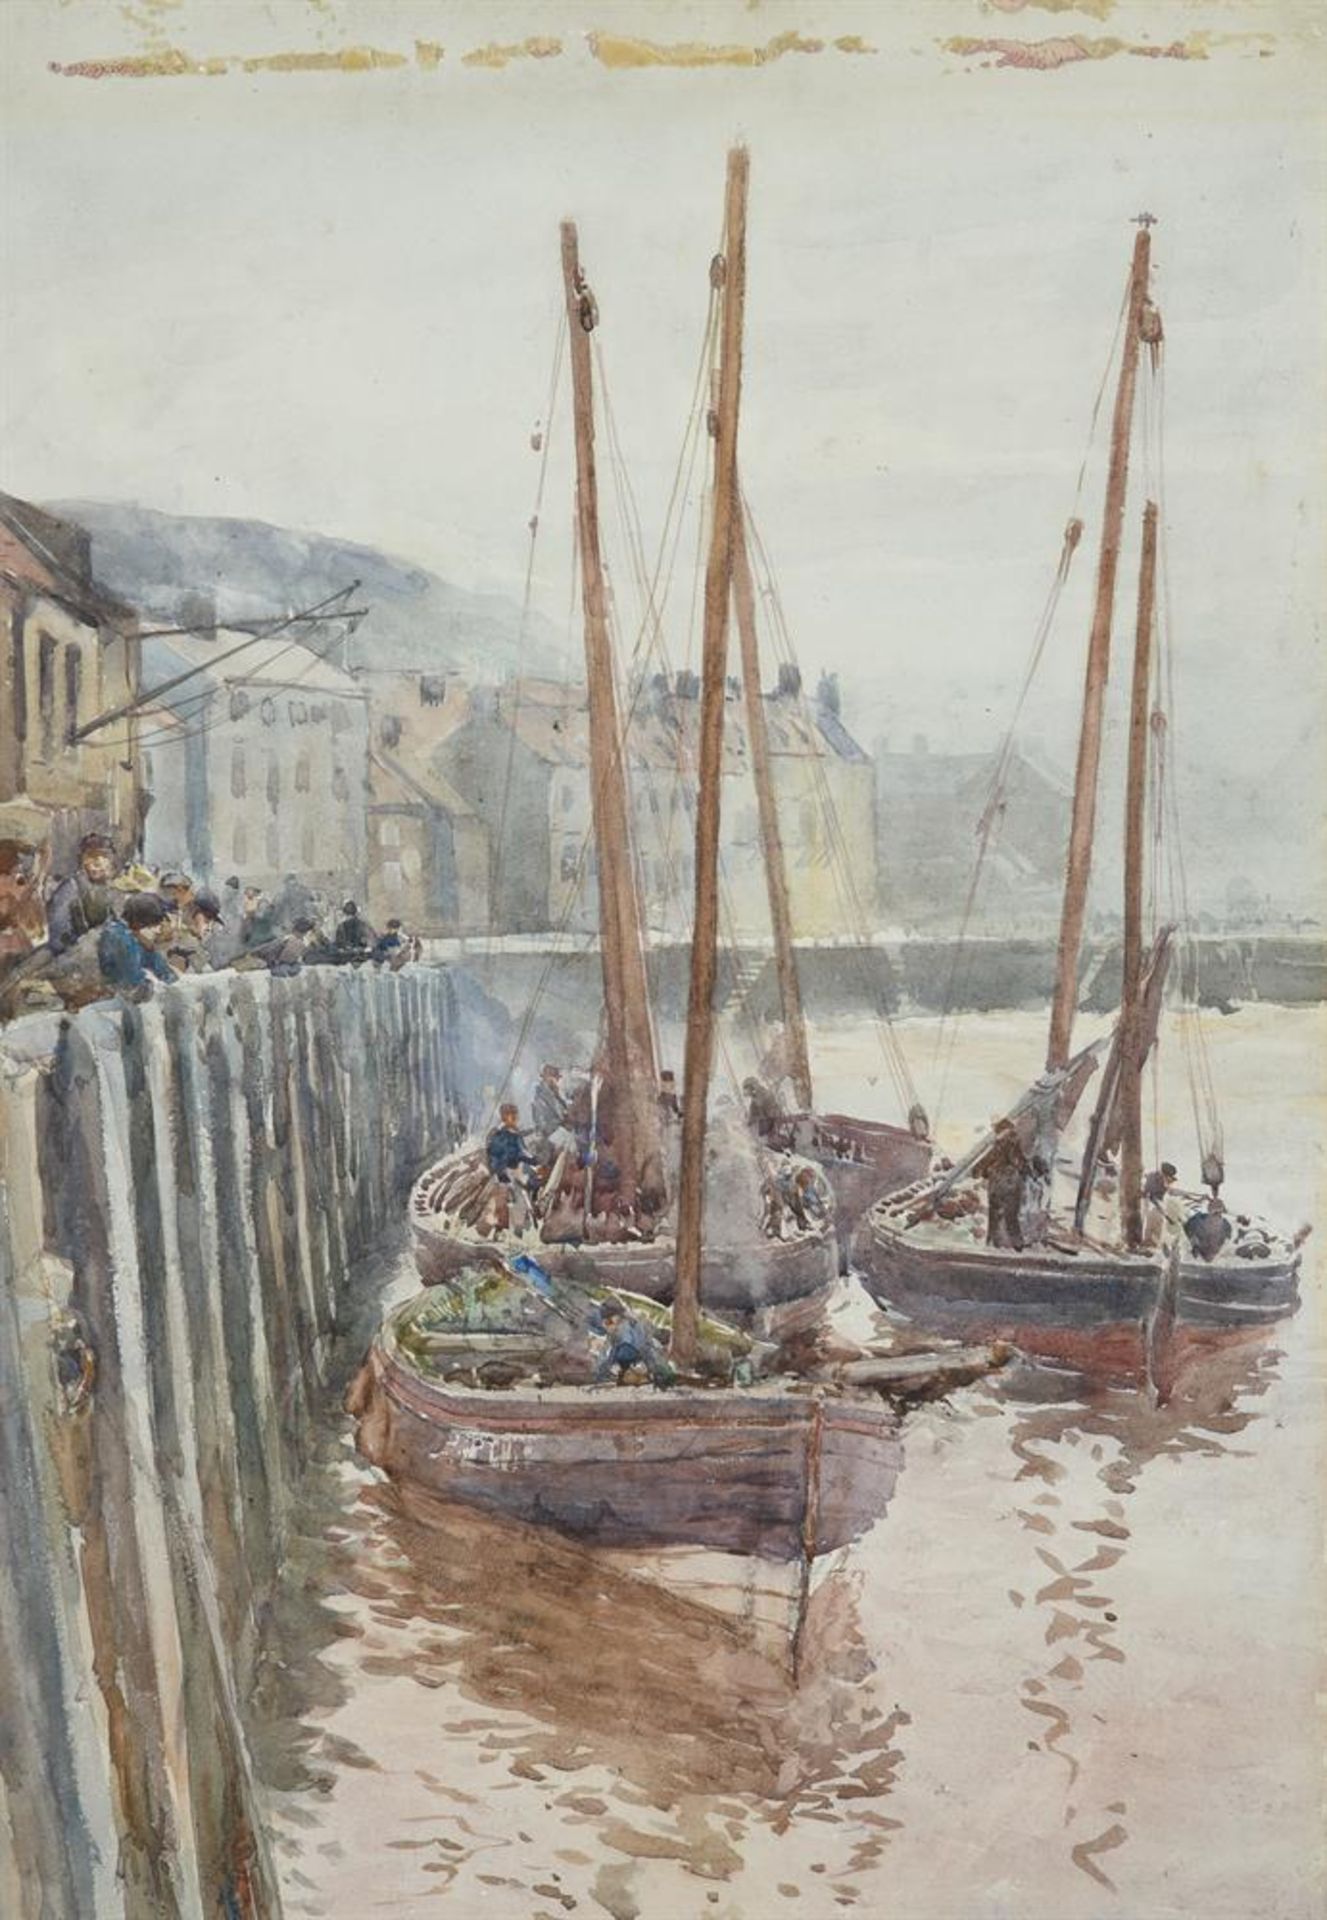 British School (19th century), Boats in harbour